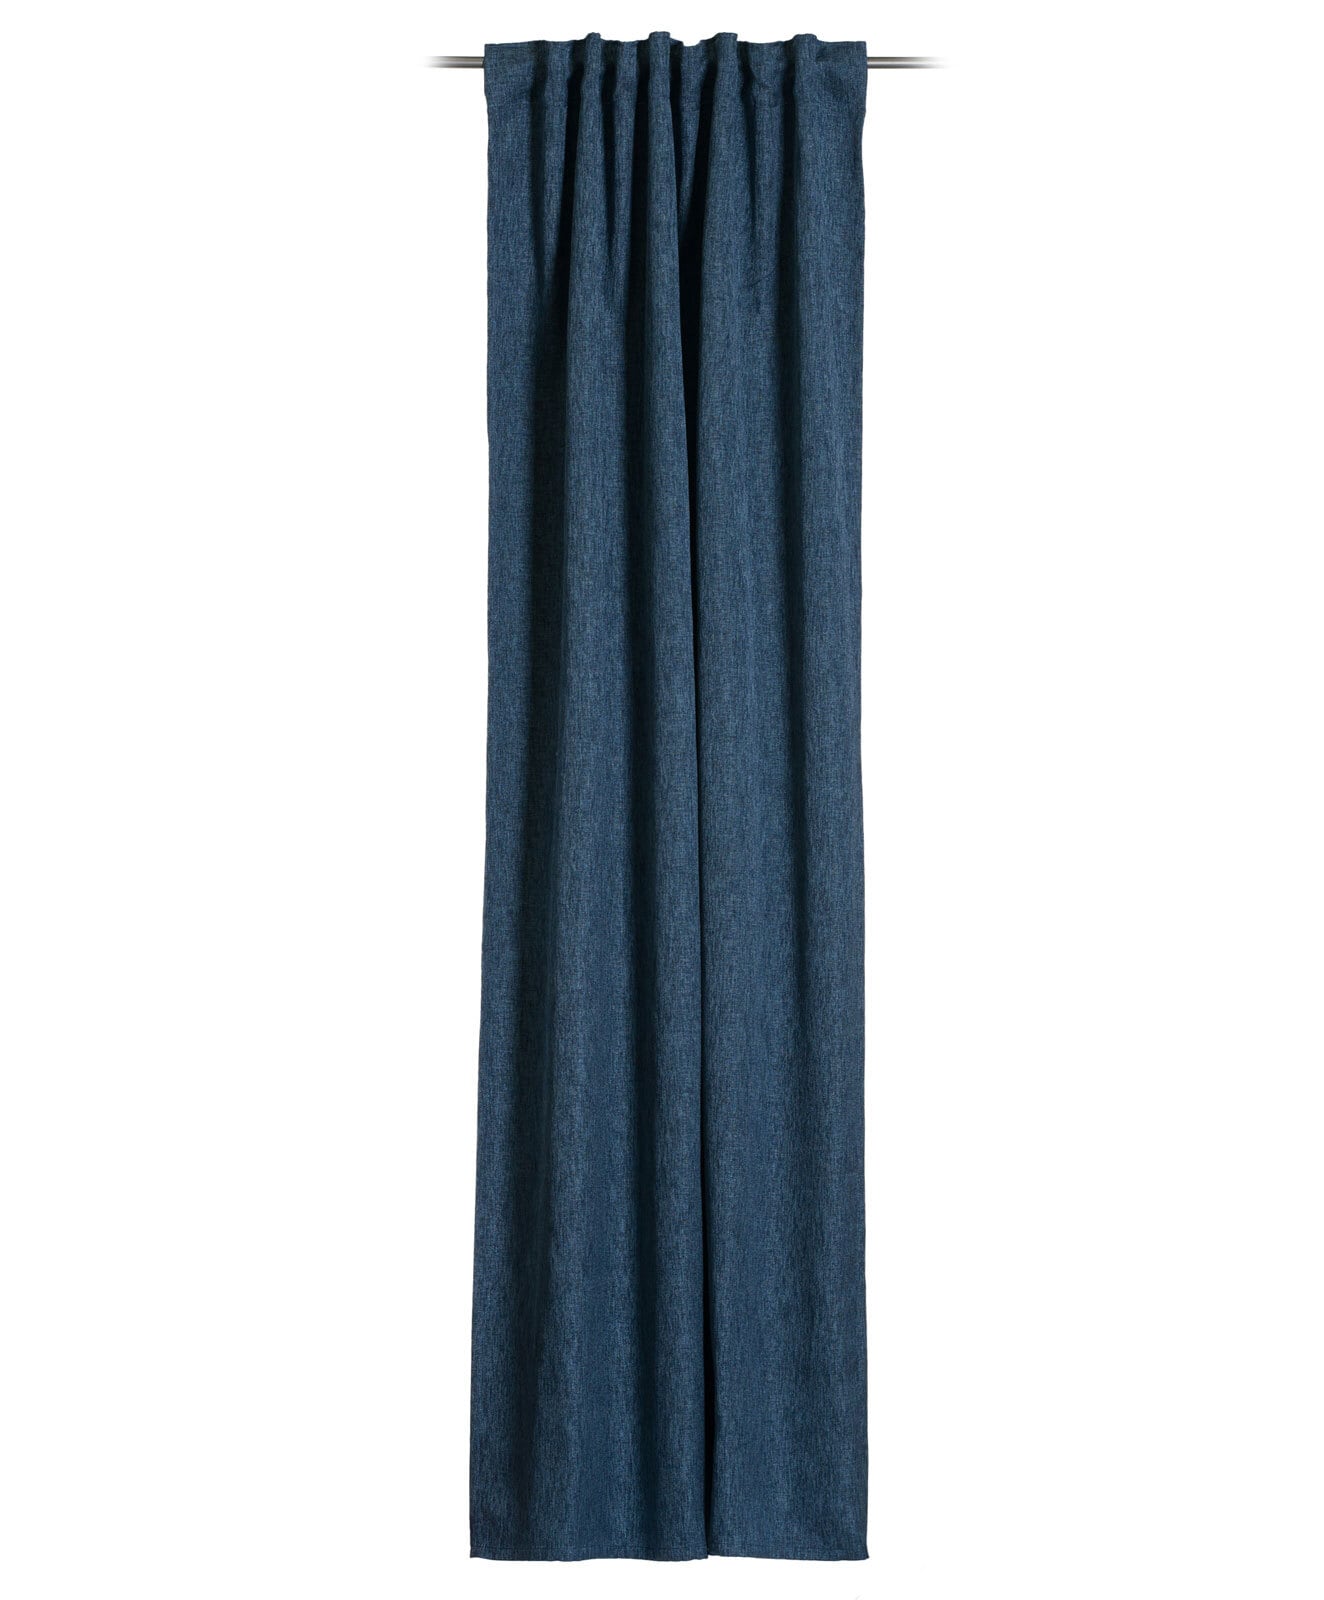 GÖZZE Schlaufenschal GIGOLO 140 x 245 cm blau